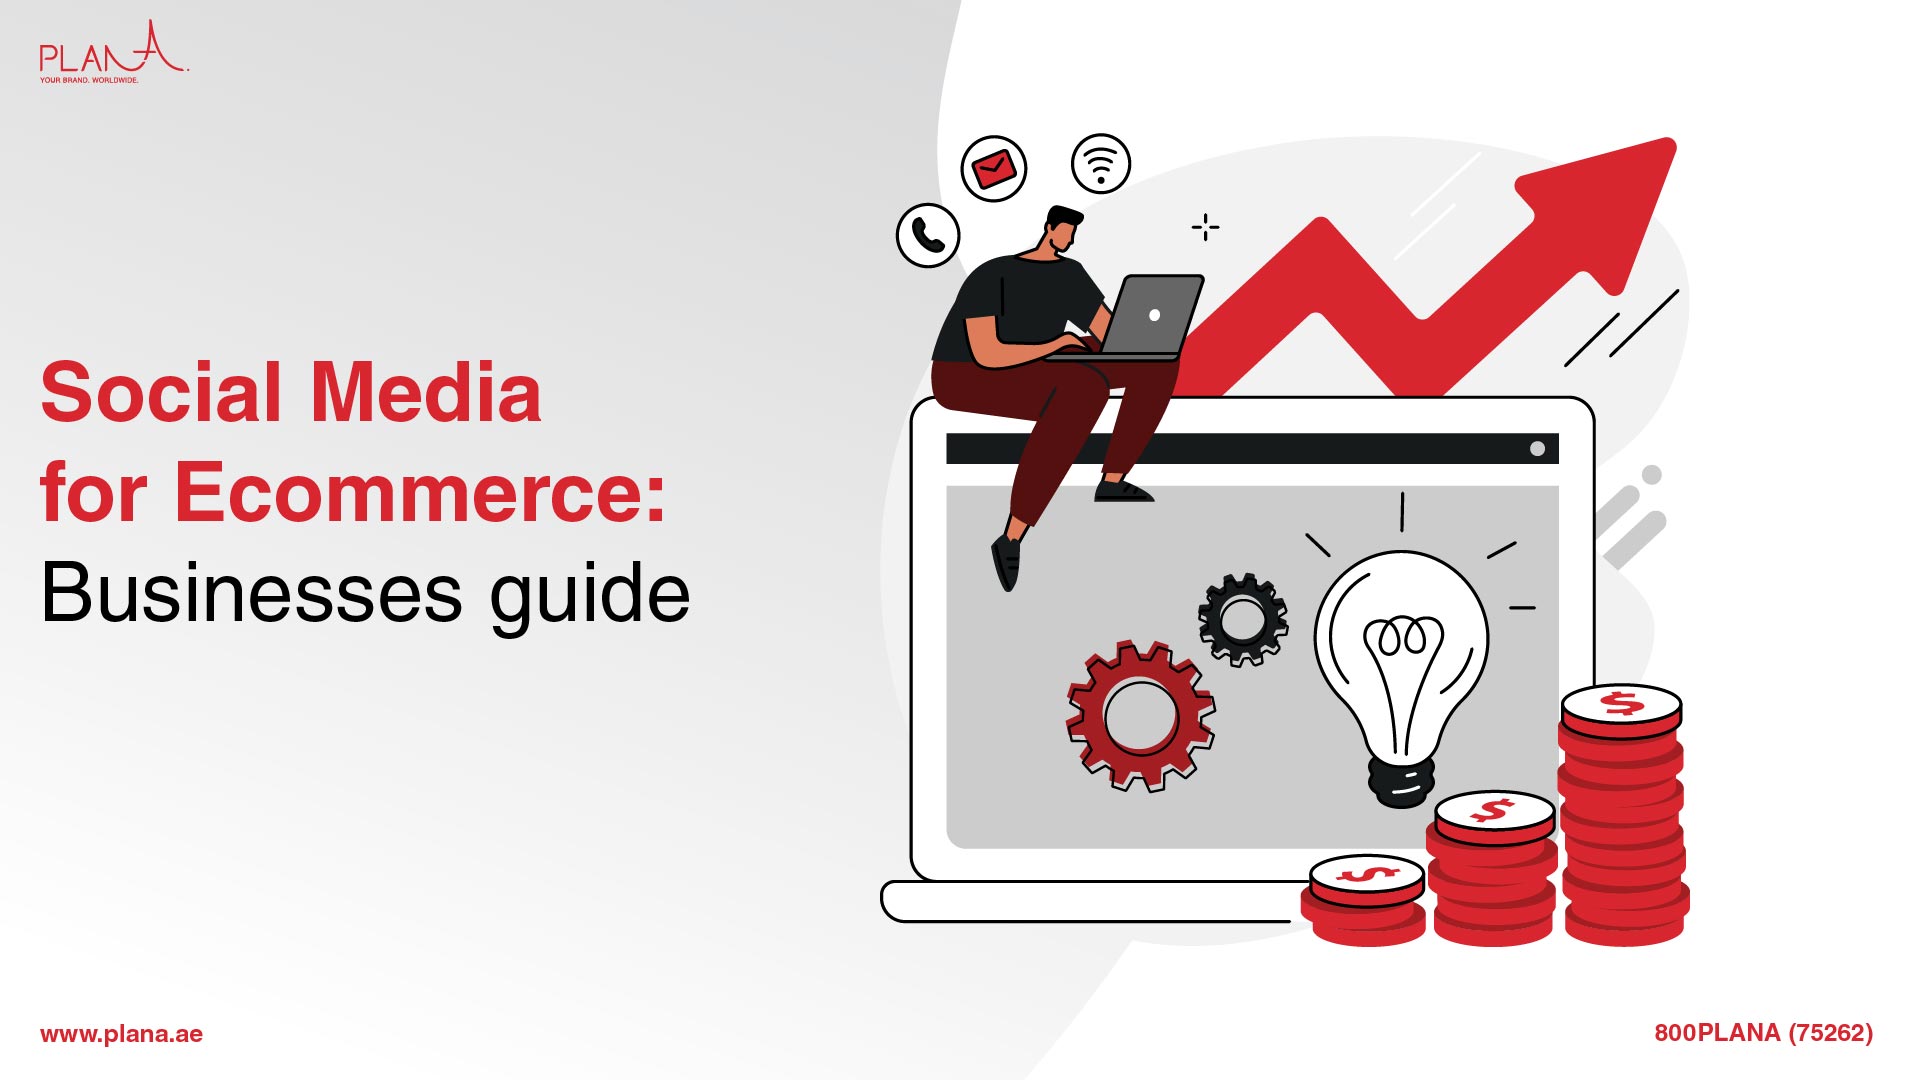 Social Media for Ecommerce: Businesses guide